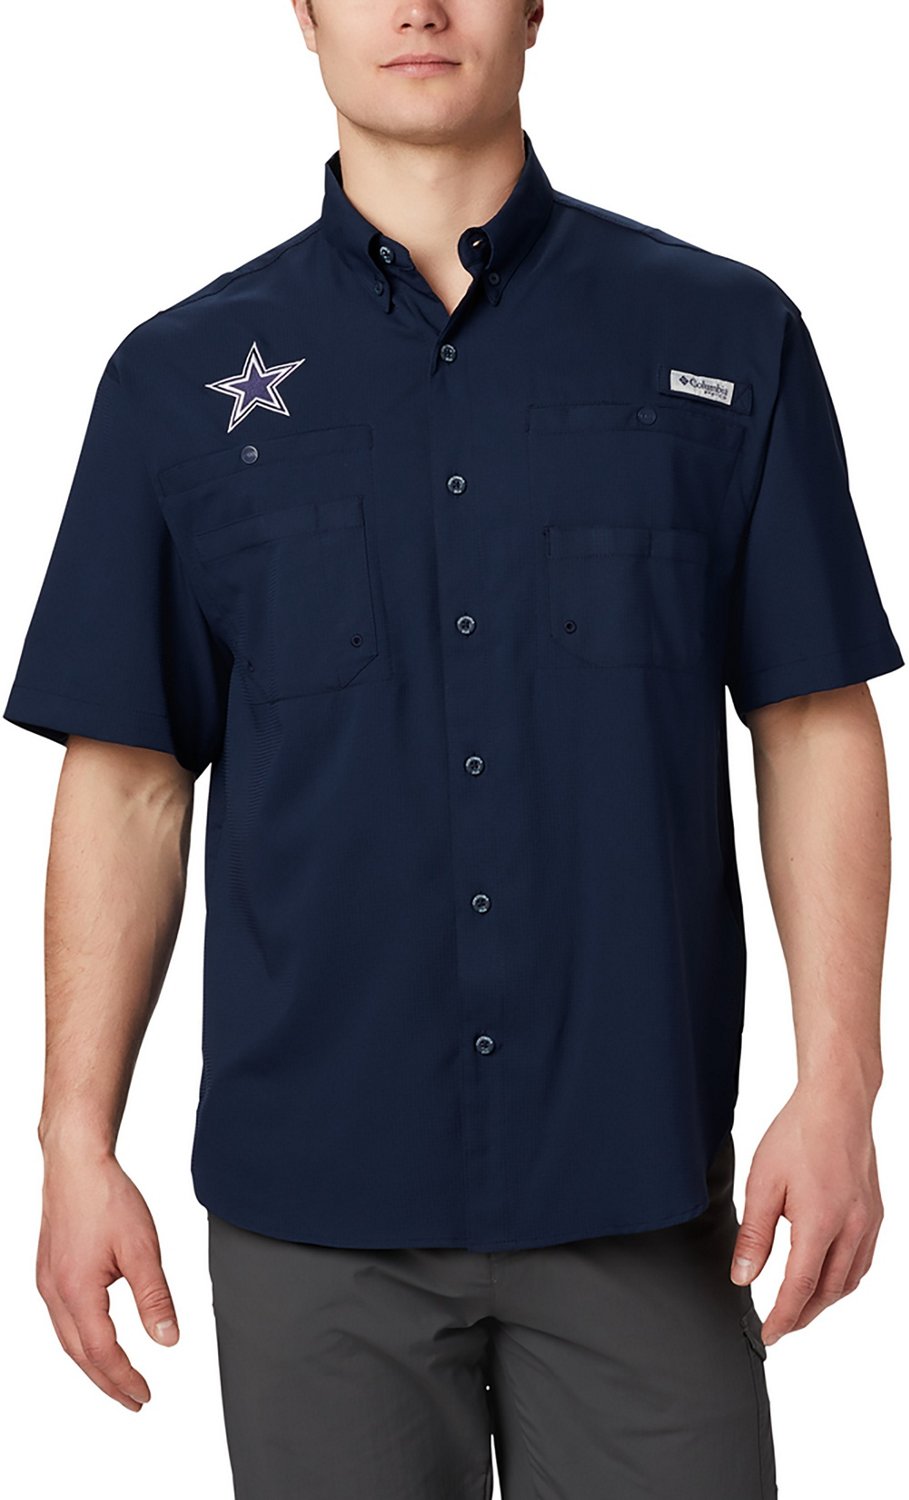 Dallas Cowboys Jerseys, Apparel, & Shirts